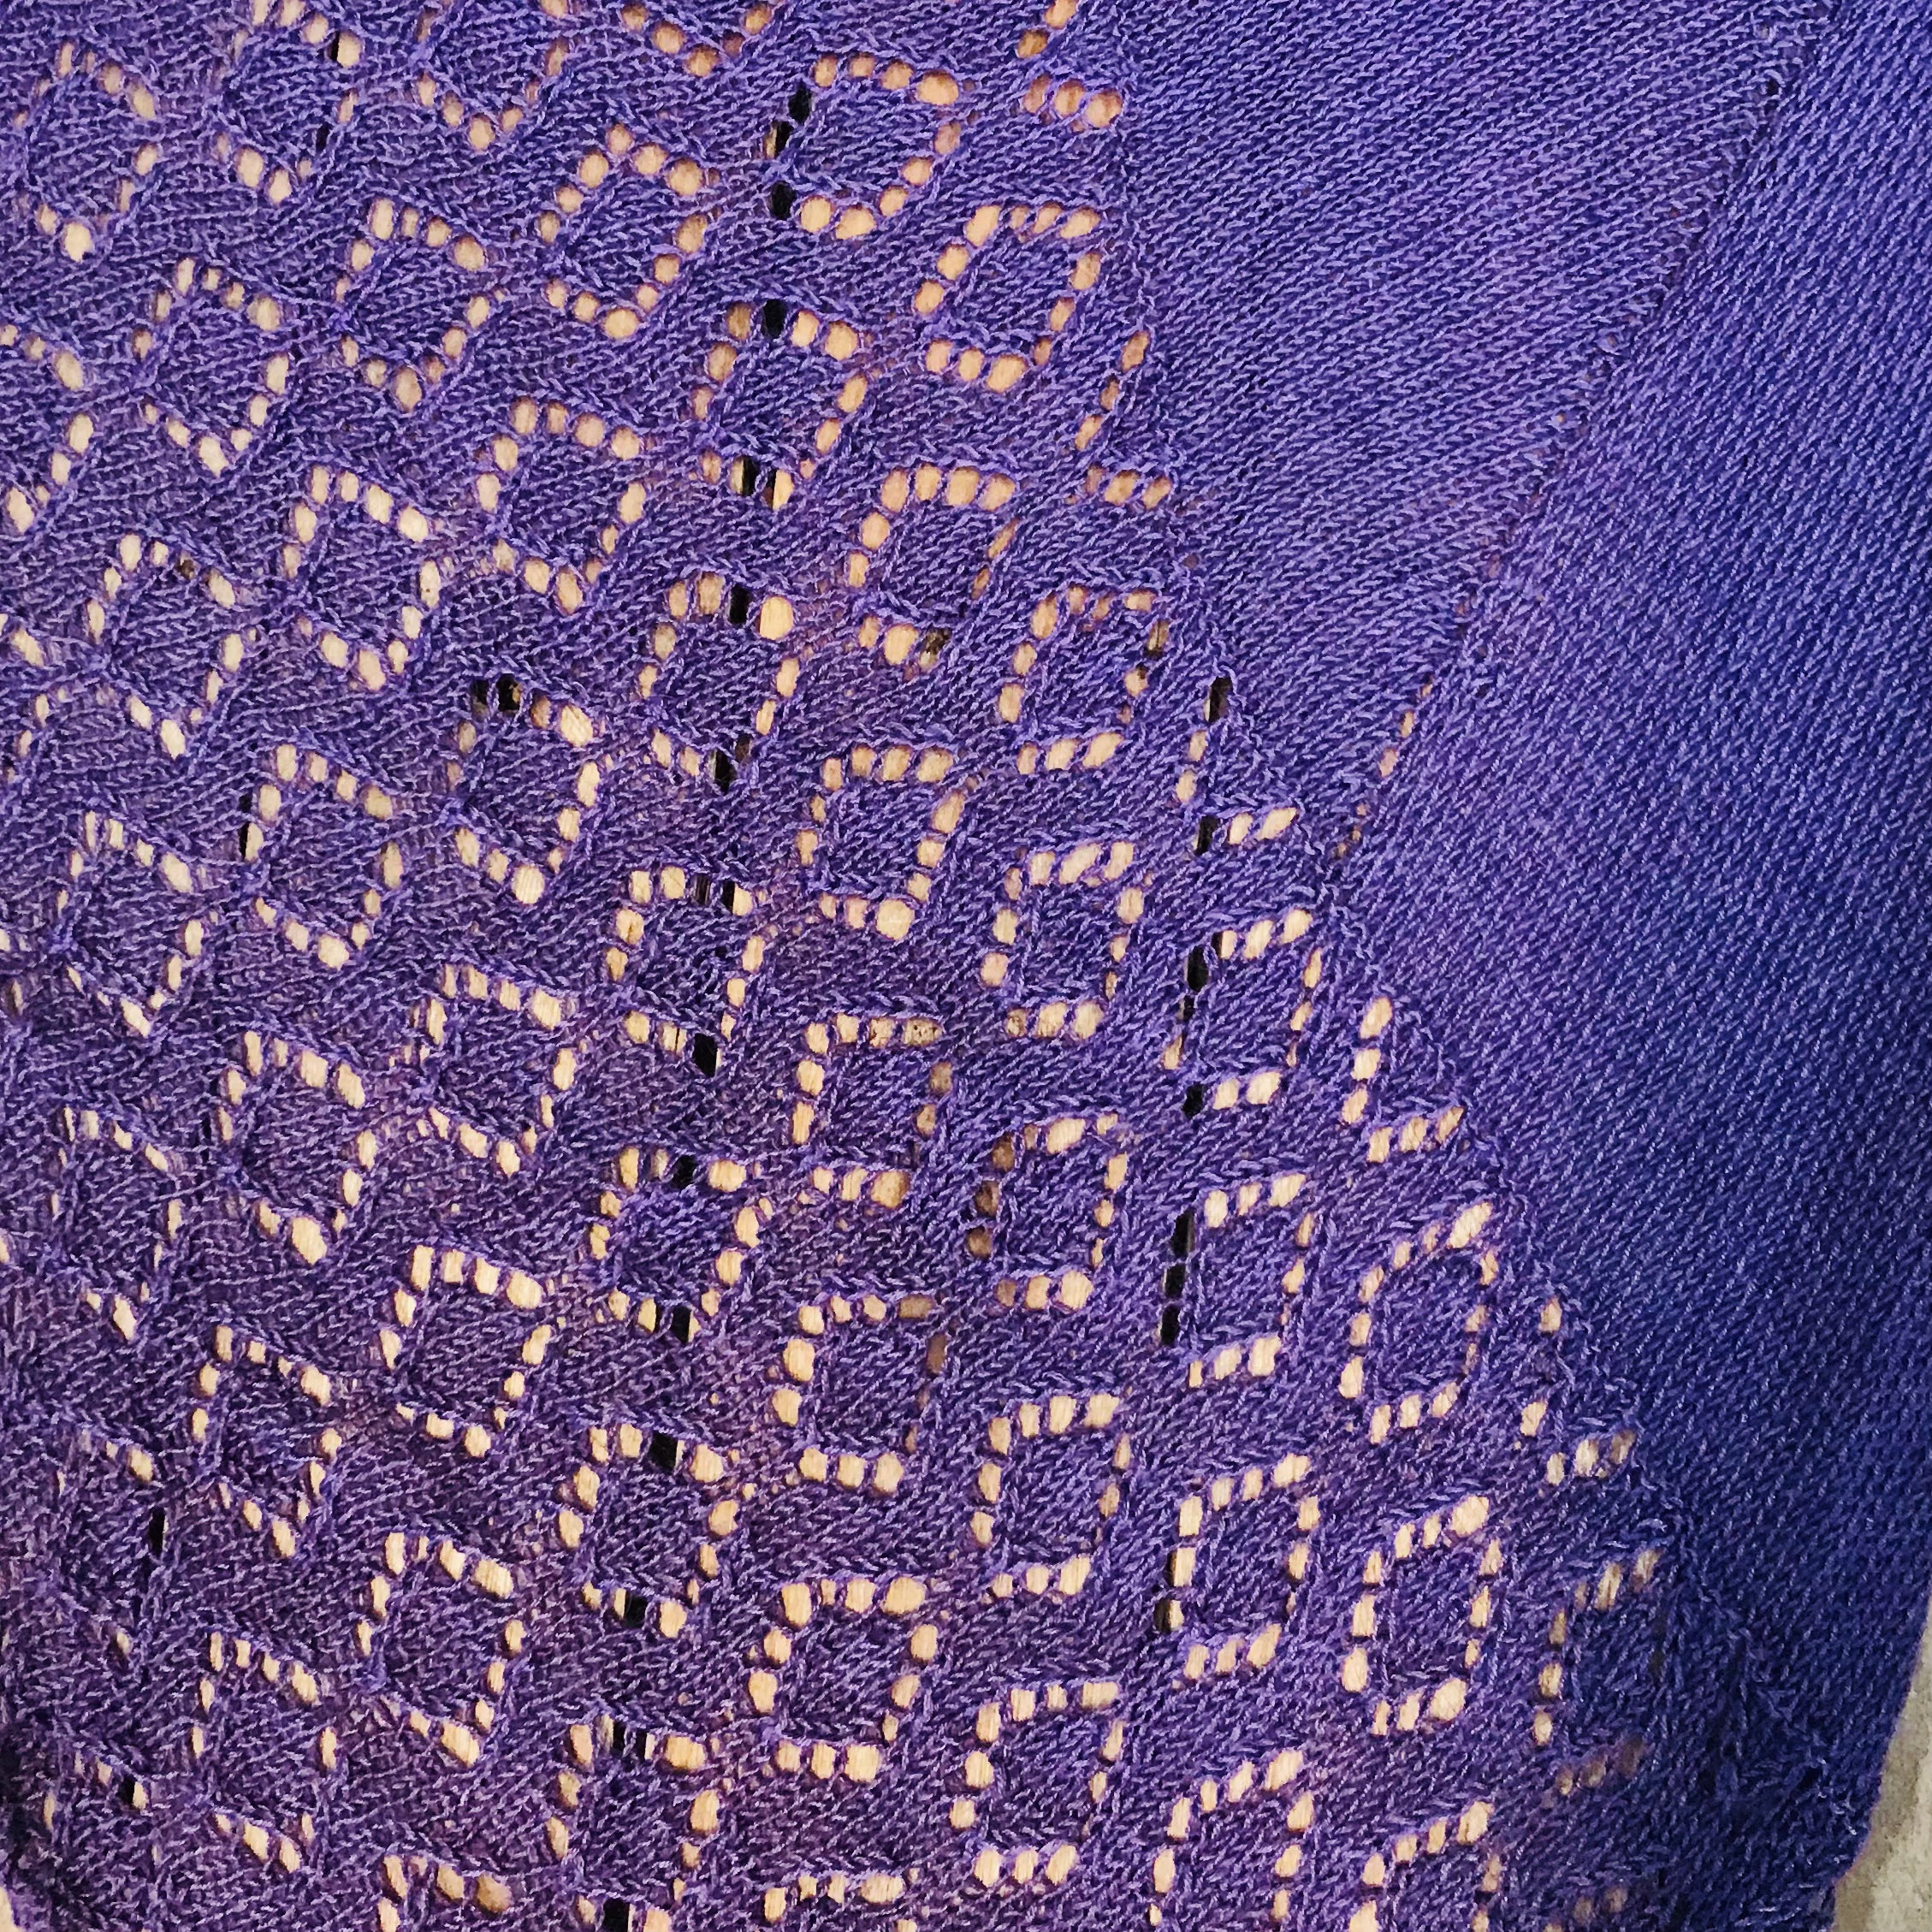 hand-knitted locally - Purple  Crochet Scarf Shawl